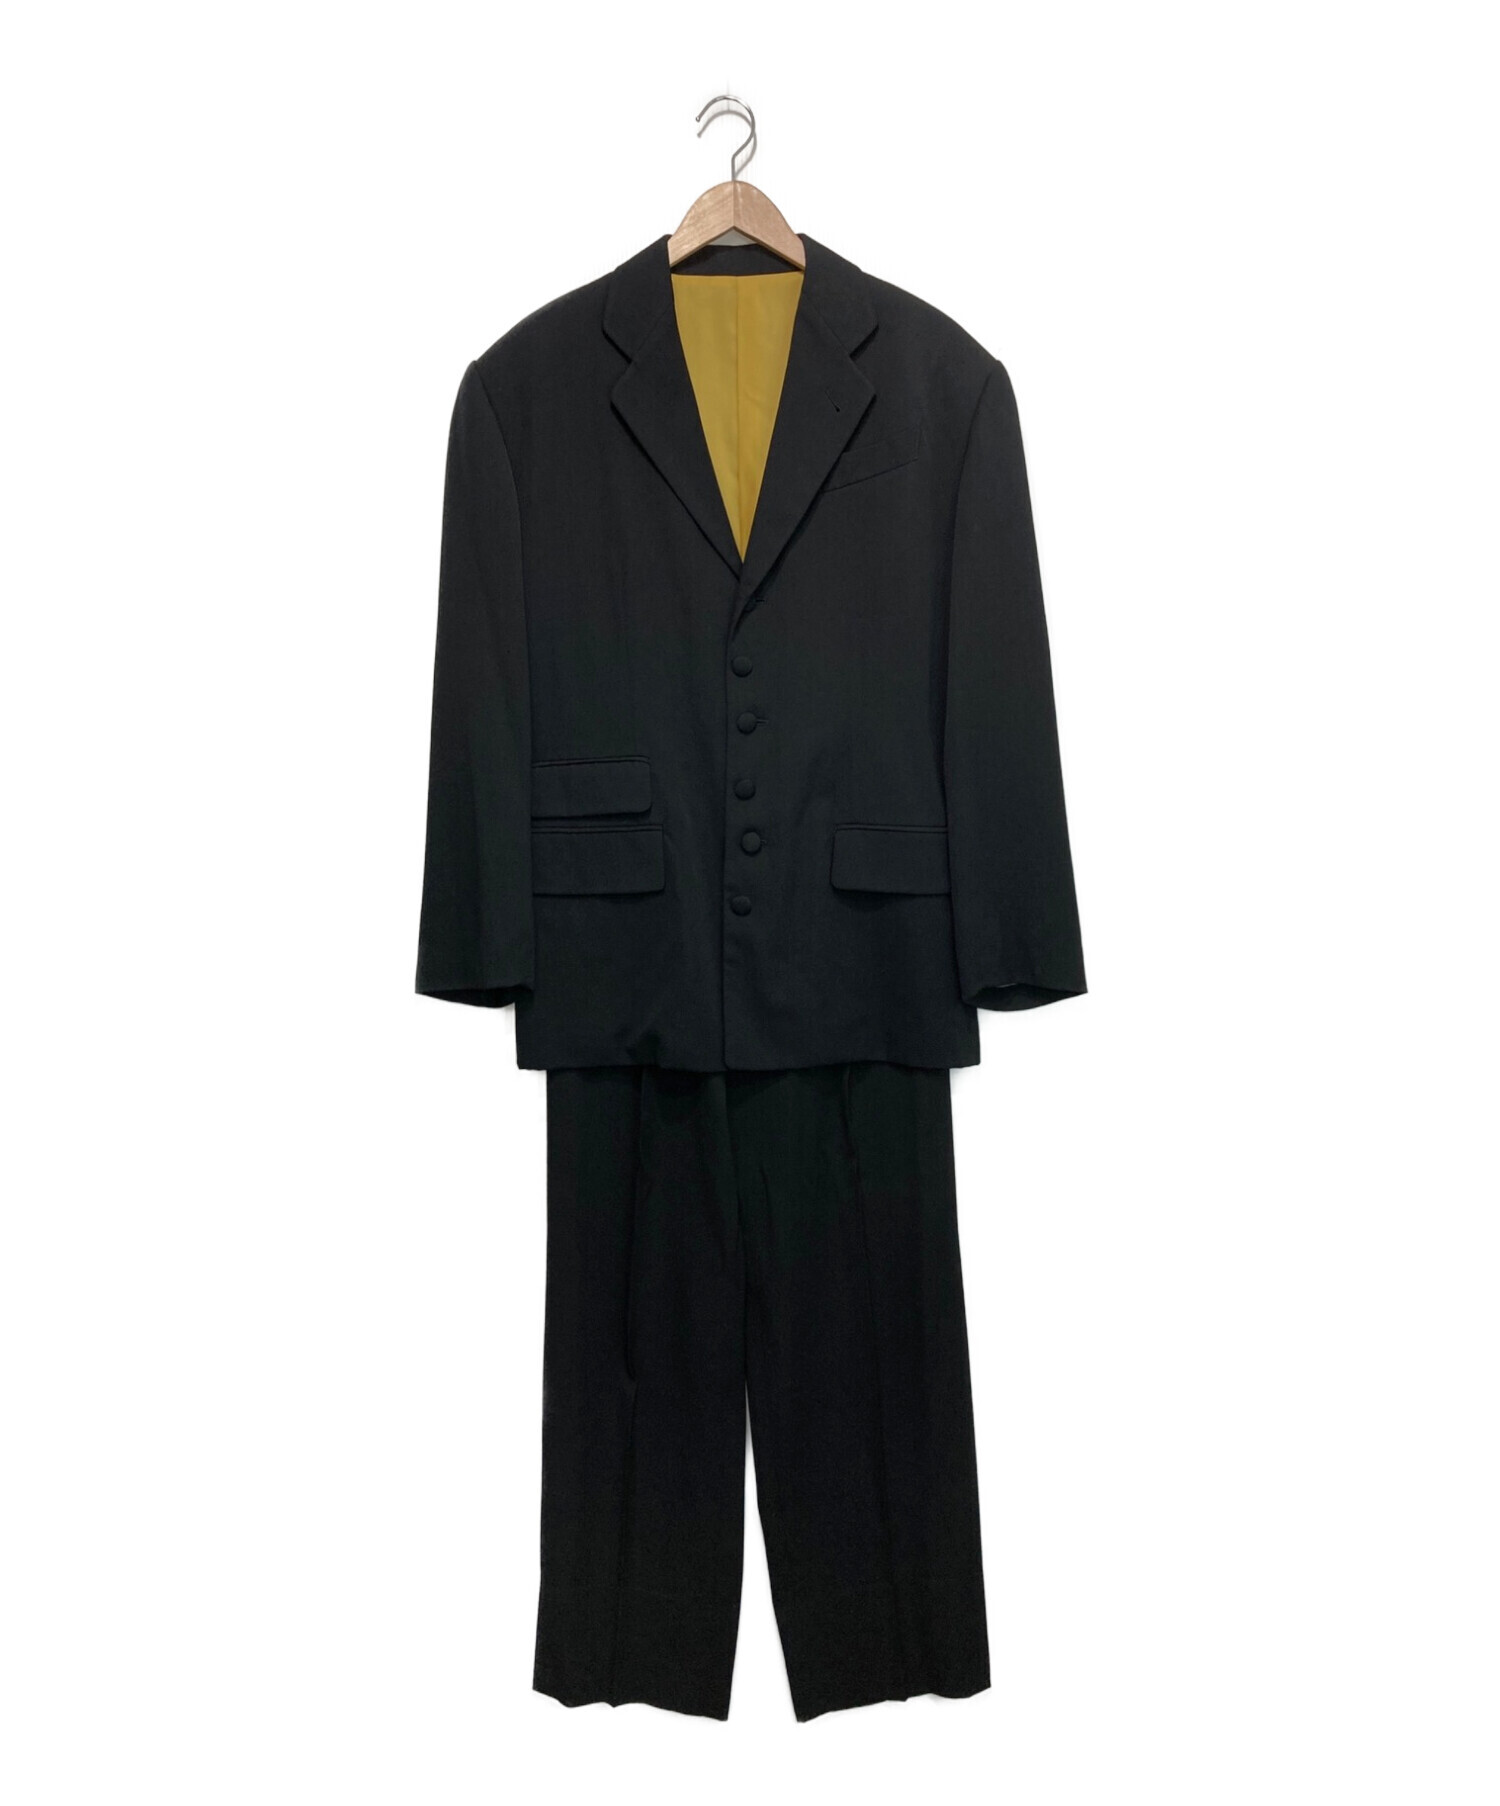 Jean Paul Gaultier homme (ジャンポールゴルチェオム) セットアップスーツ ブラック サイズ:48